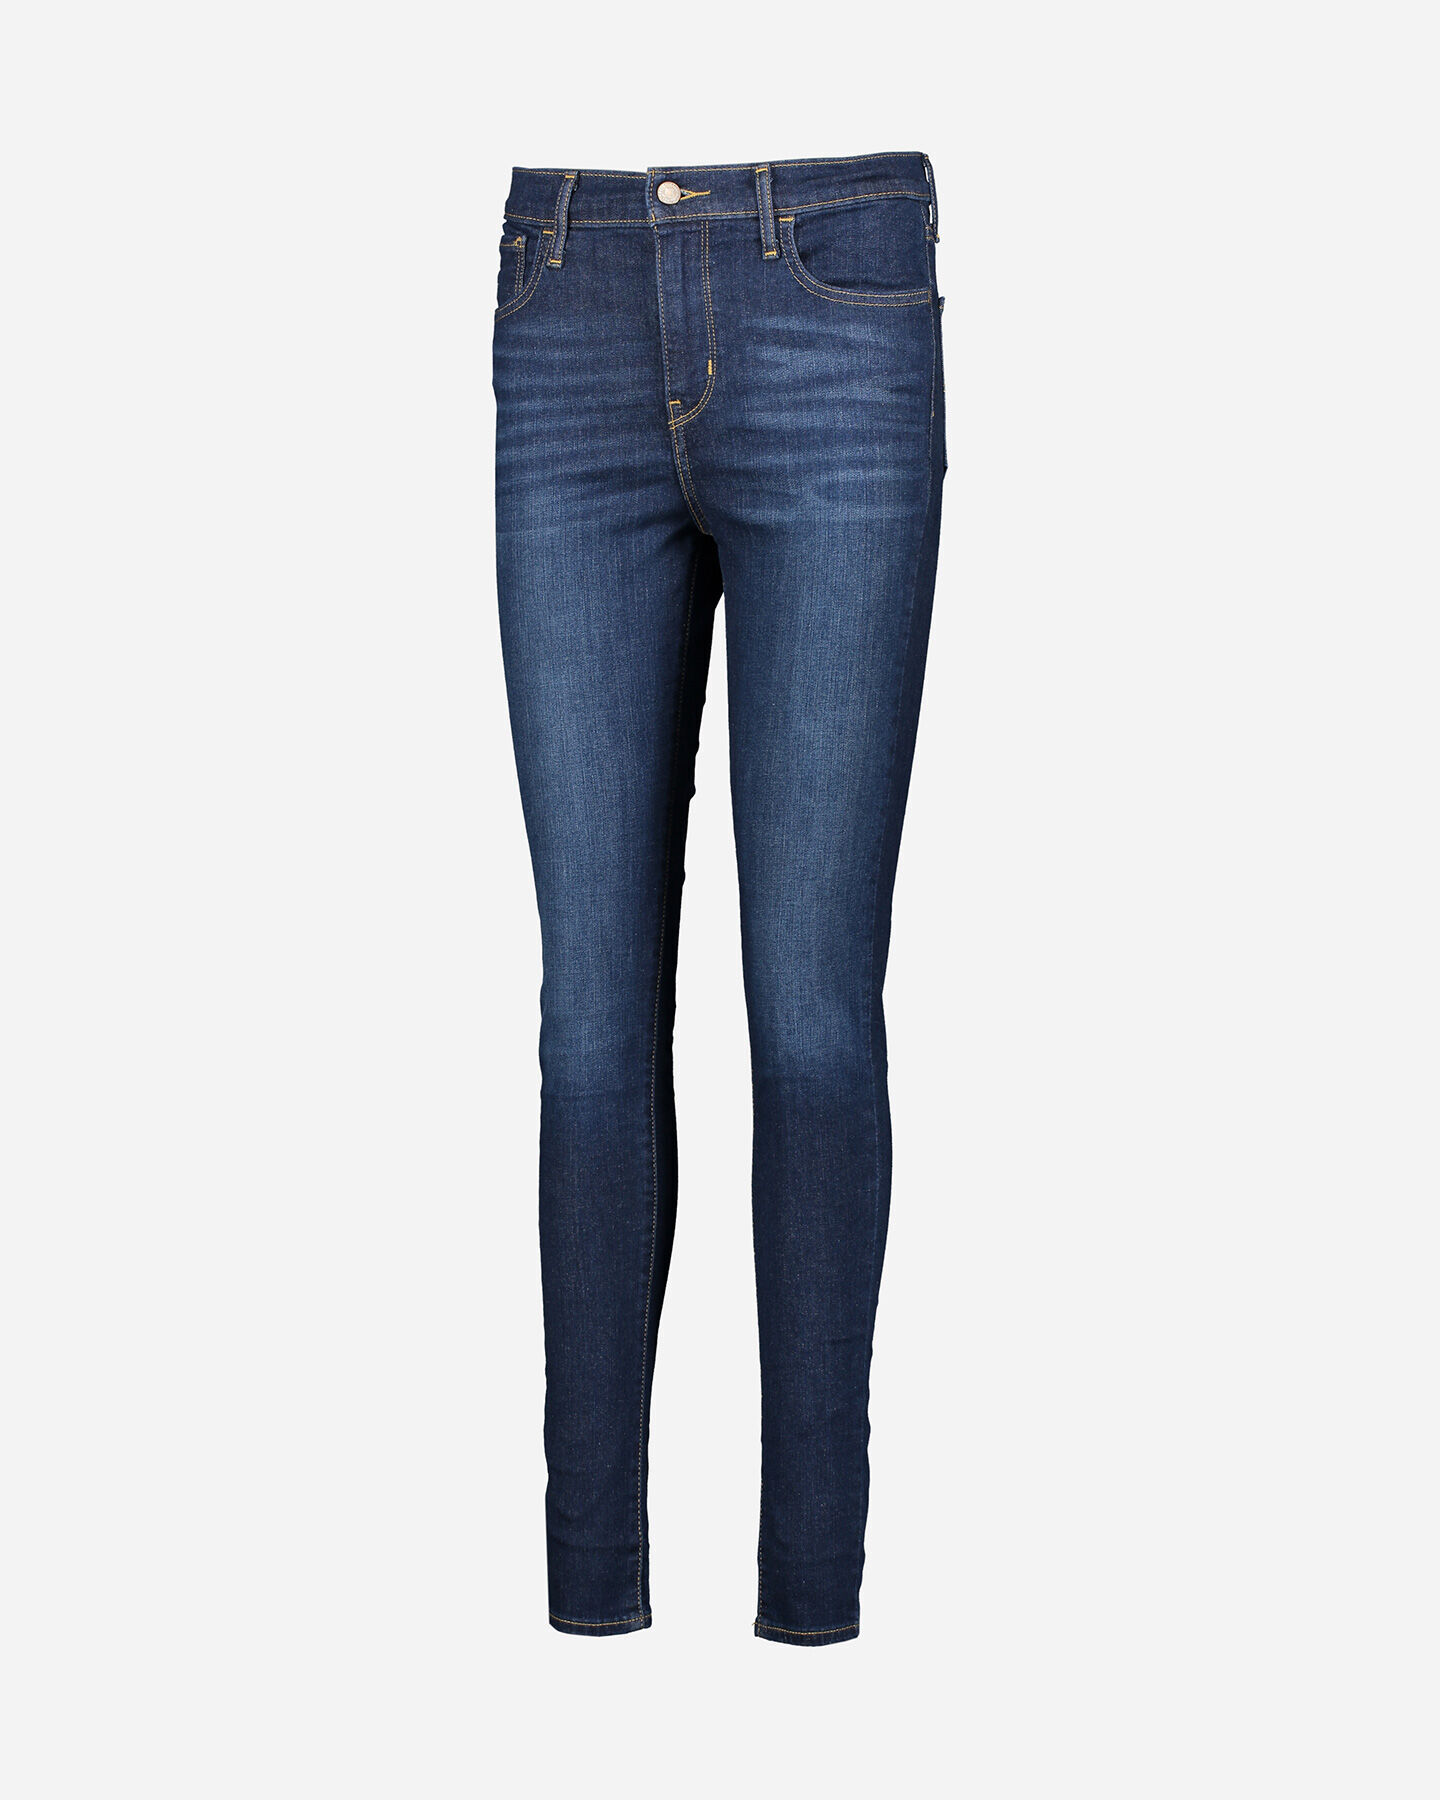  Jeans LEVI'S HIGH RISE SUPER SKINNY 720 W S4083521|0138|26 scatto 4